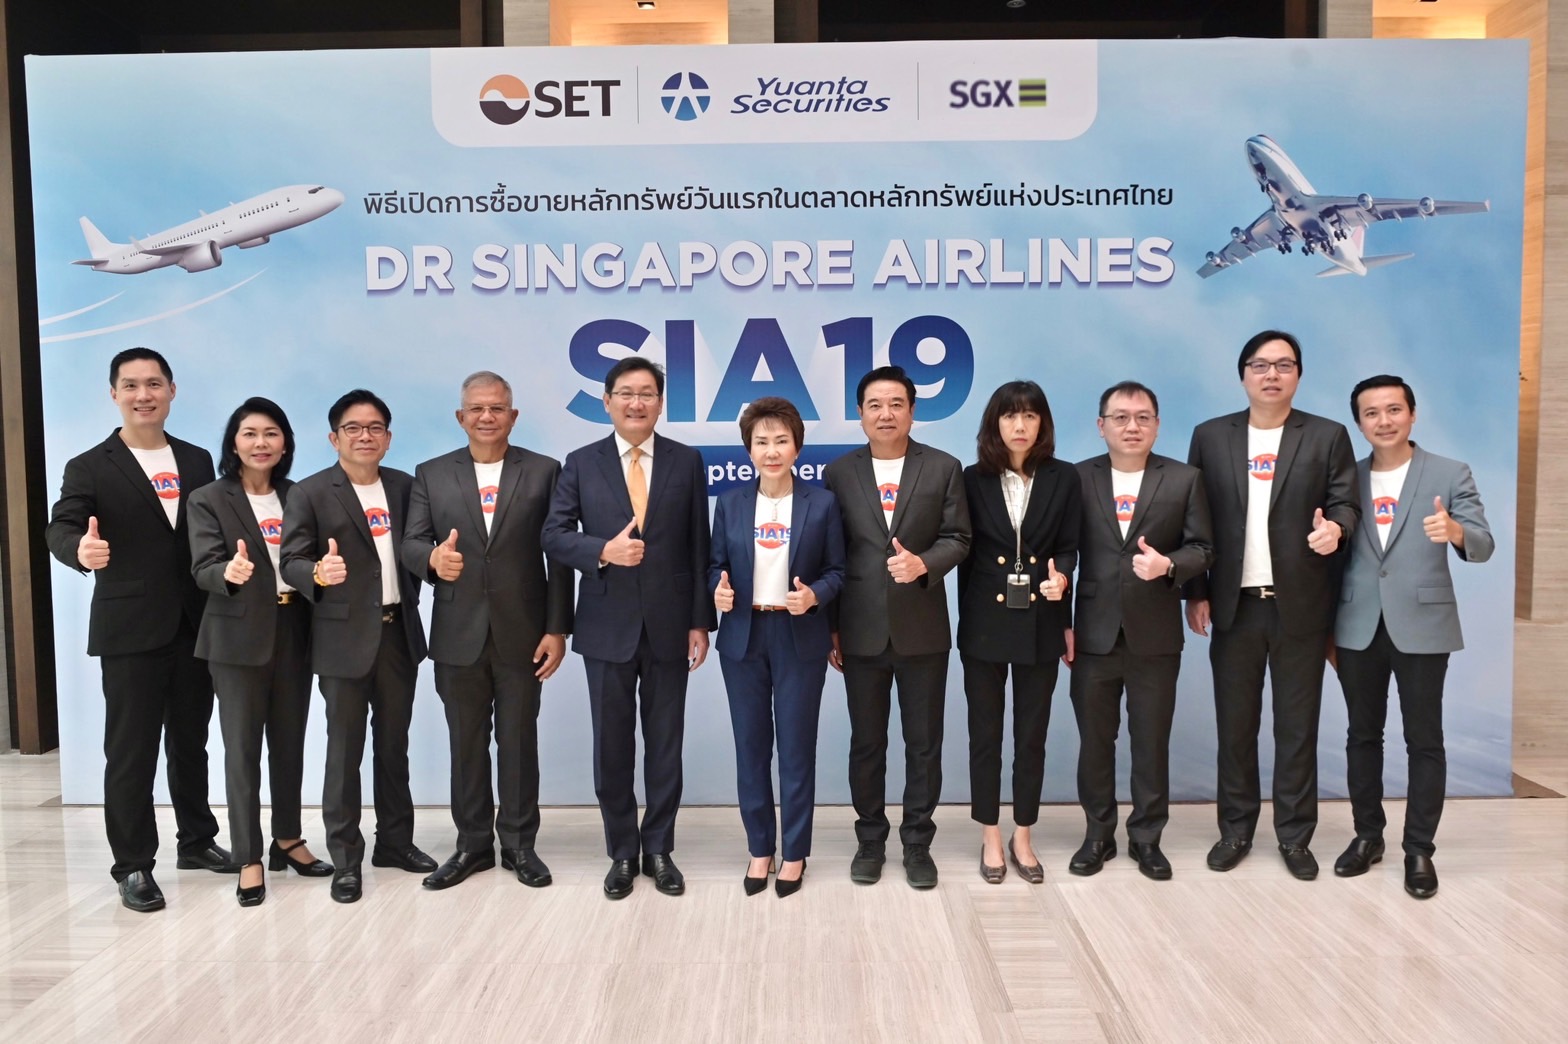  “DR:SIA19” อ้างอิงหุ้น Singapore Airlines  ดีเดย์เทรดวันแรกราคาเปิดสอดคล้องกับราคาหุ้นที่ซื้อขายที่ตลาด SGX นลท.เชื่อมั่นศักยภาพเป็นหุ้นสายการบินที่รายได้-กำไร-มาร์เก็ตแคปเติบโต